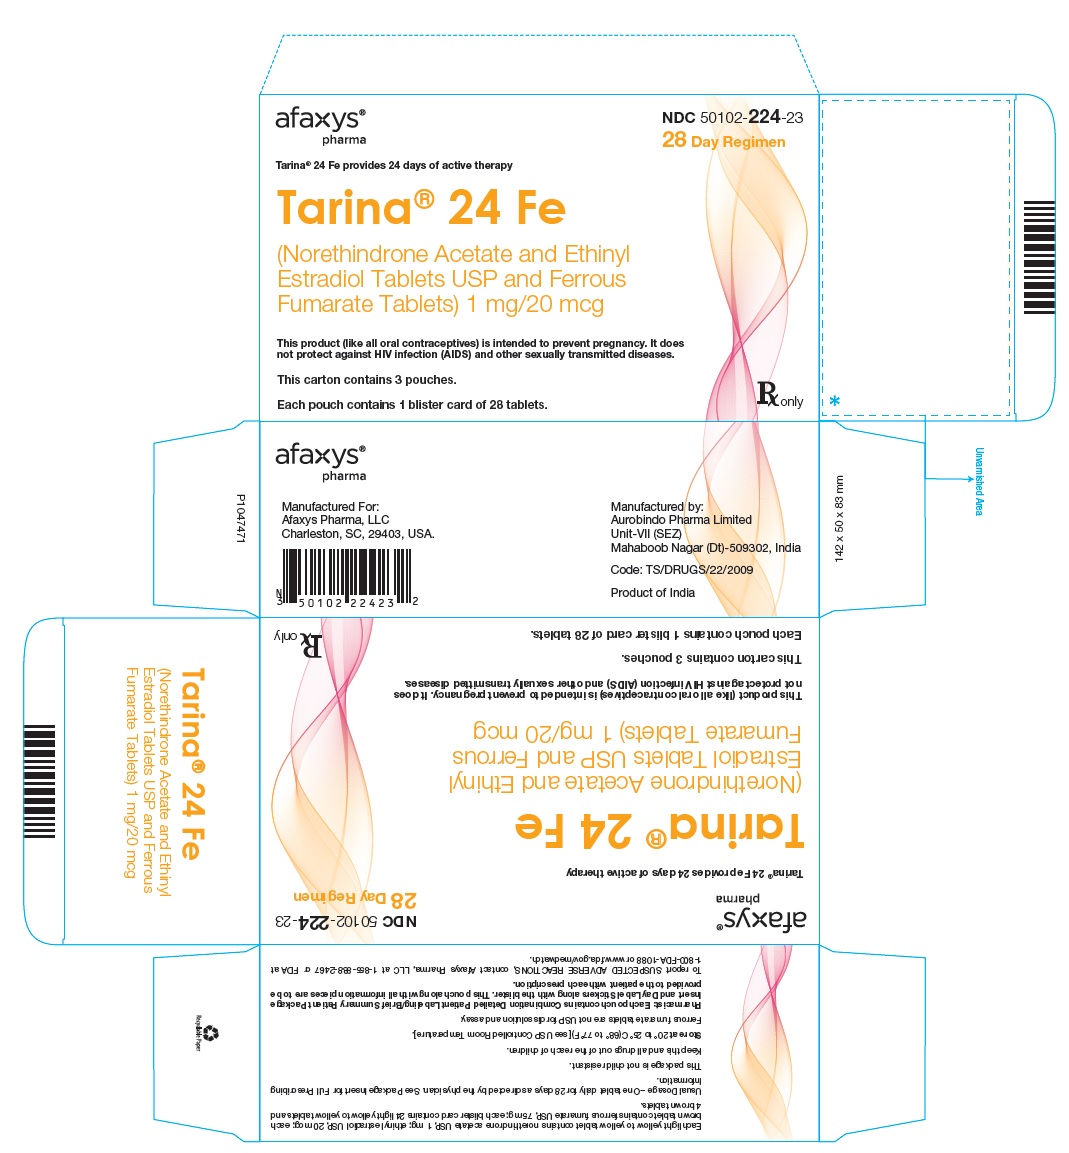 PACKAGE LABEL-PRINCIPAL DISPLAY PANEL - 1 mg/20 mcg Pouch Carton Label